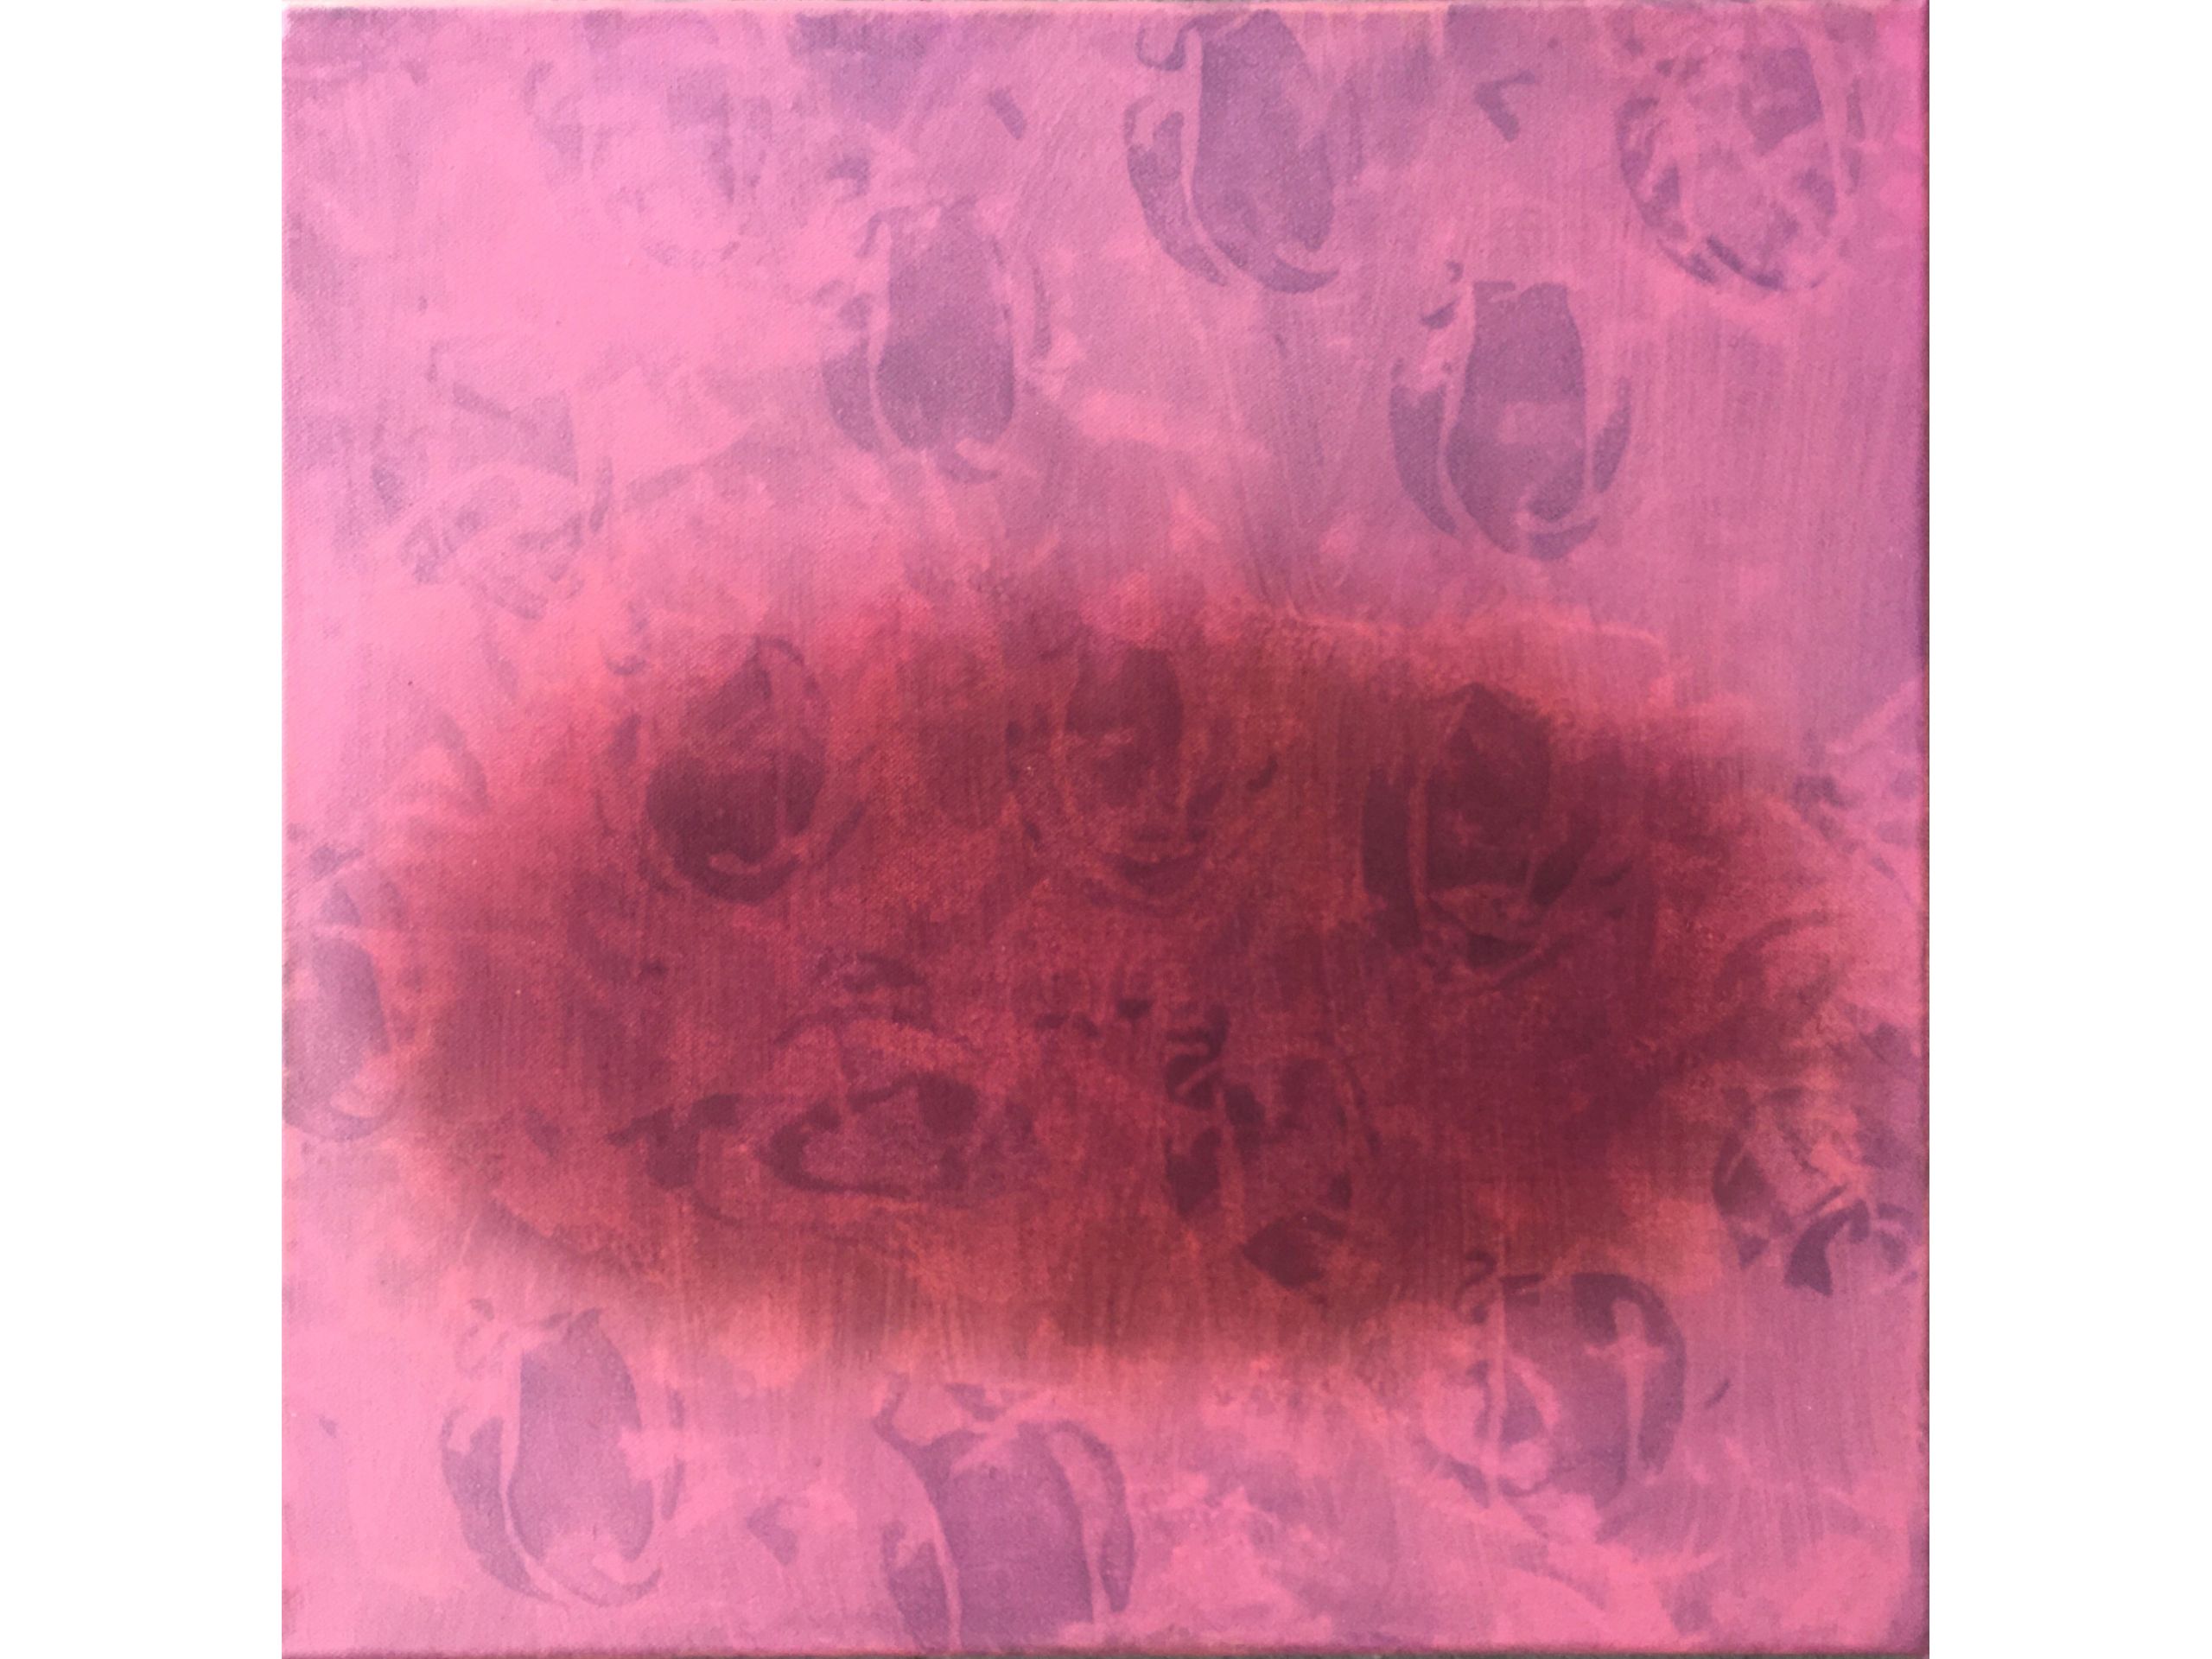 Veronika P. Dutt, 'Lichtung. Rot Barock', 2016, Acryl auf Leinwand, 40 x 40 cm, 300 € 